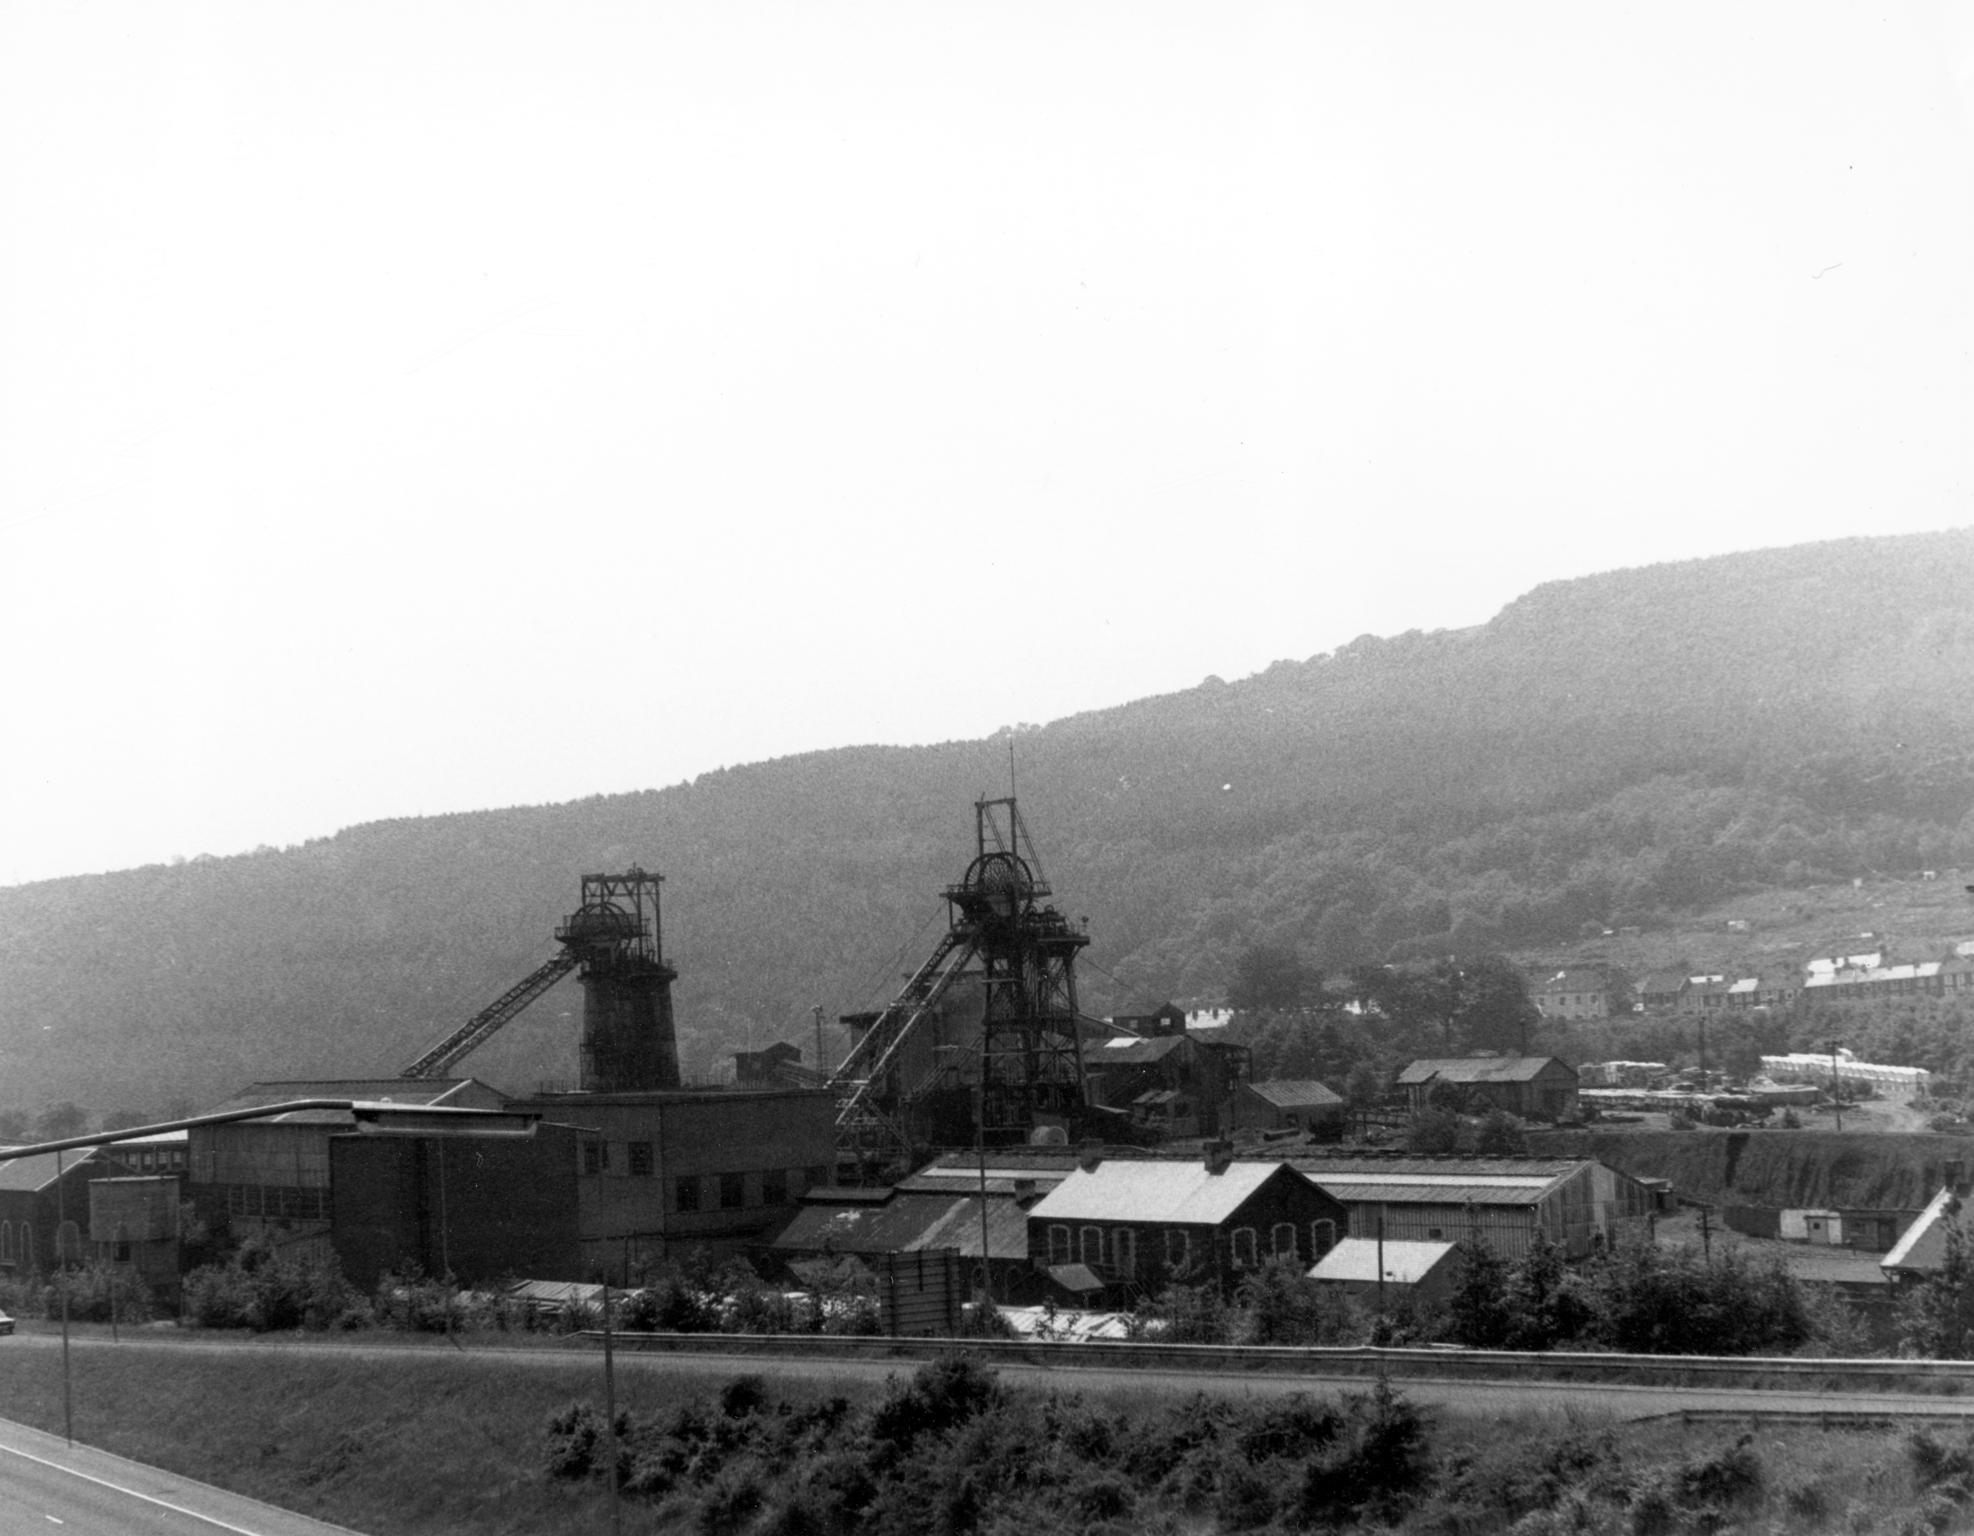 Abercynon Colliery, photograph